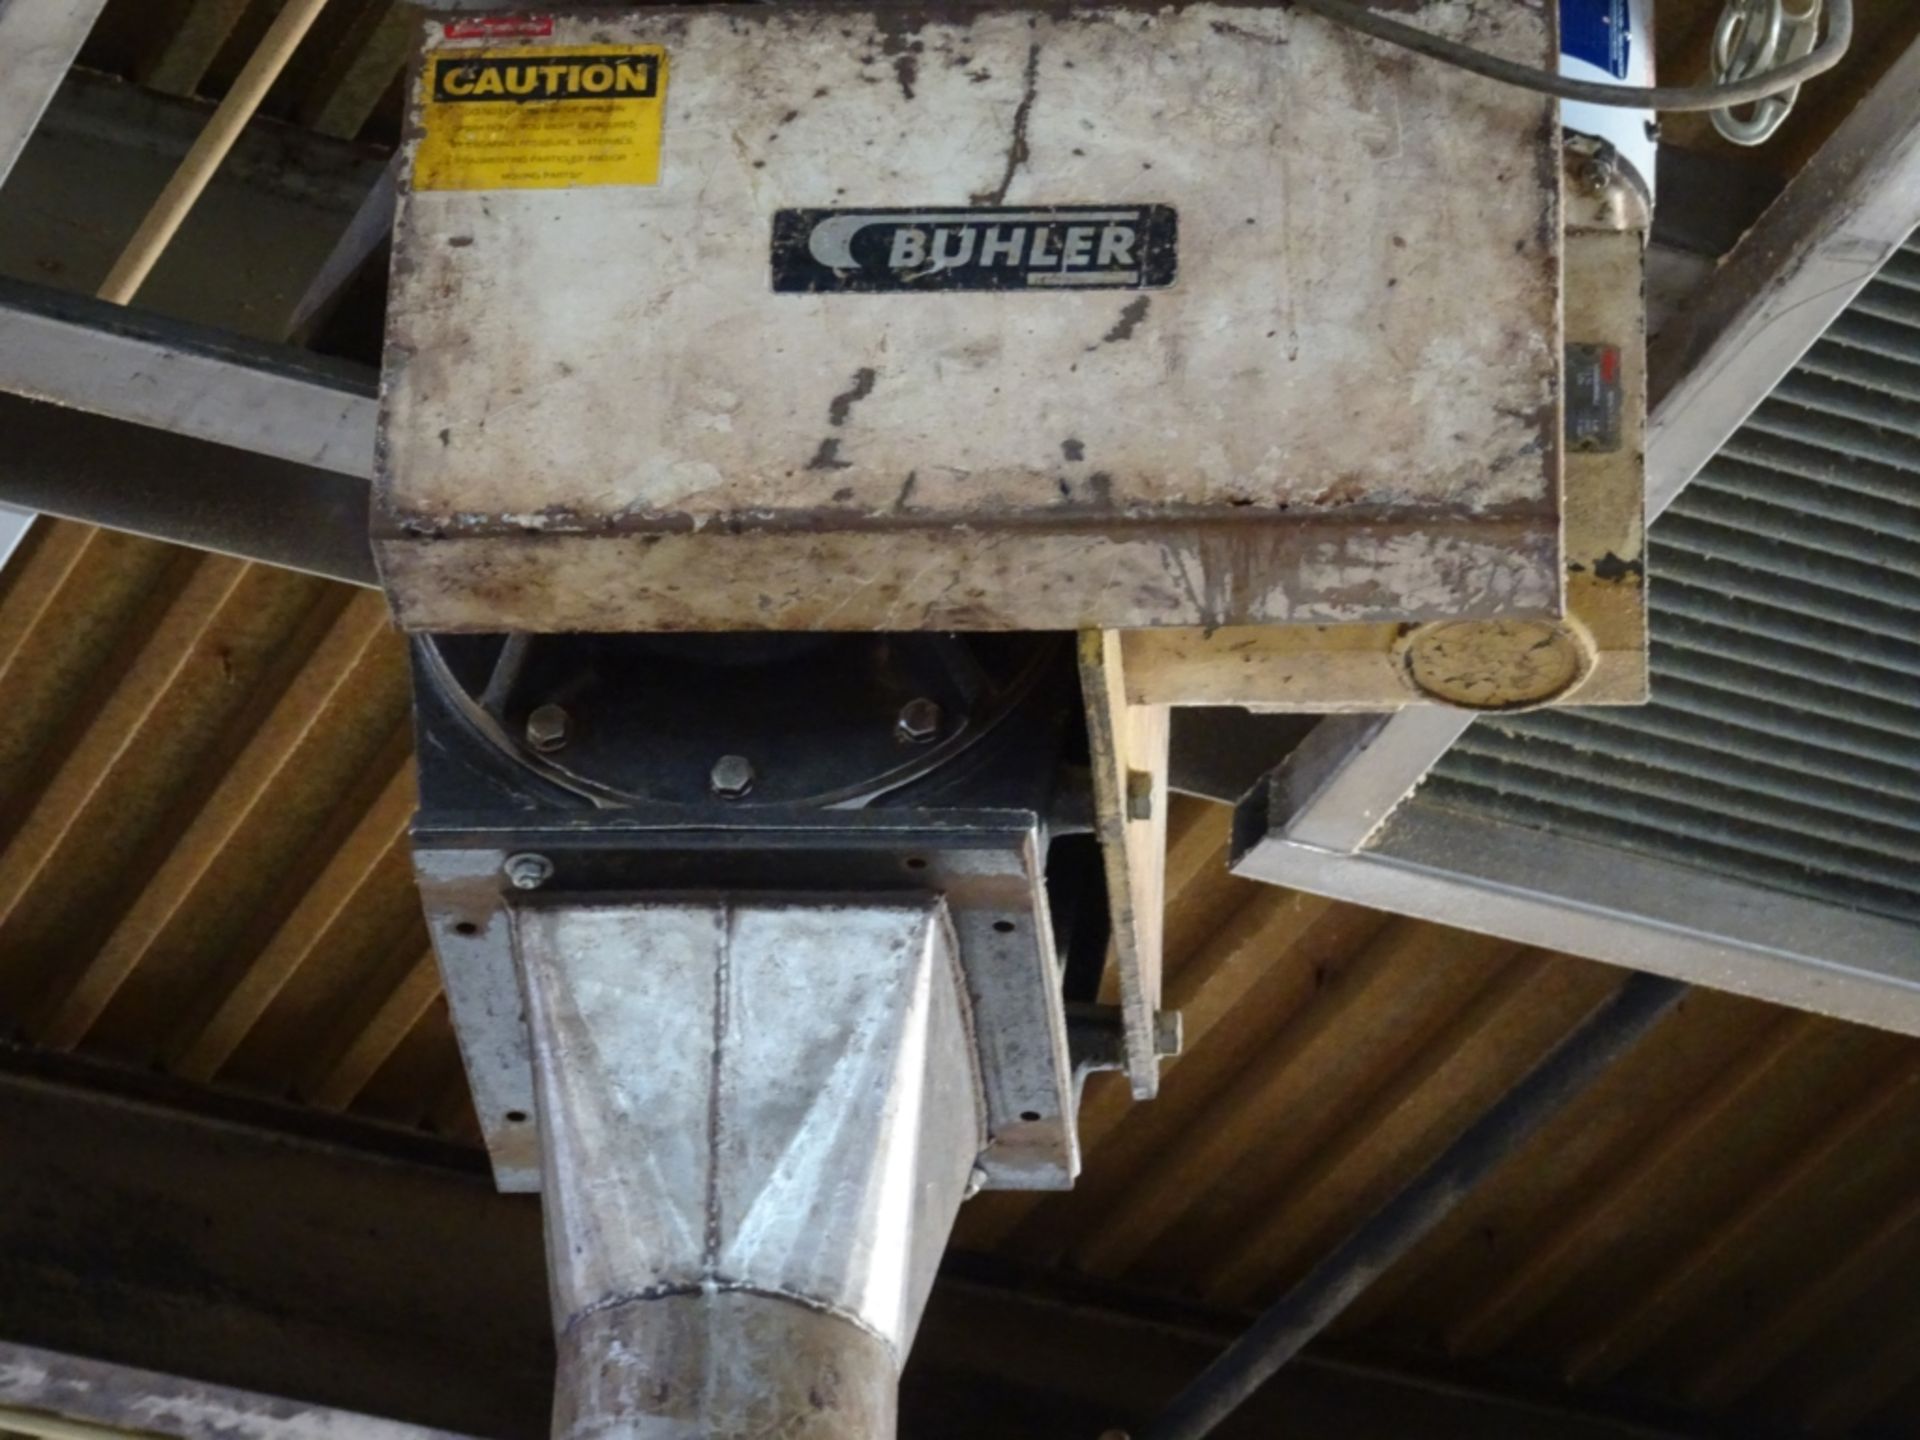 Buhler 32x32"x10' Airlock Material Drying Bin sn 54980948 w/ Associated Blow Motor, Material Feed - Image 15 of 19